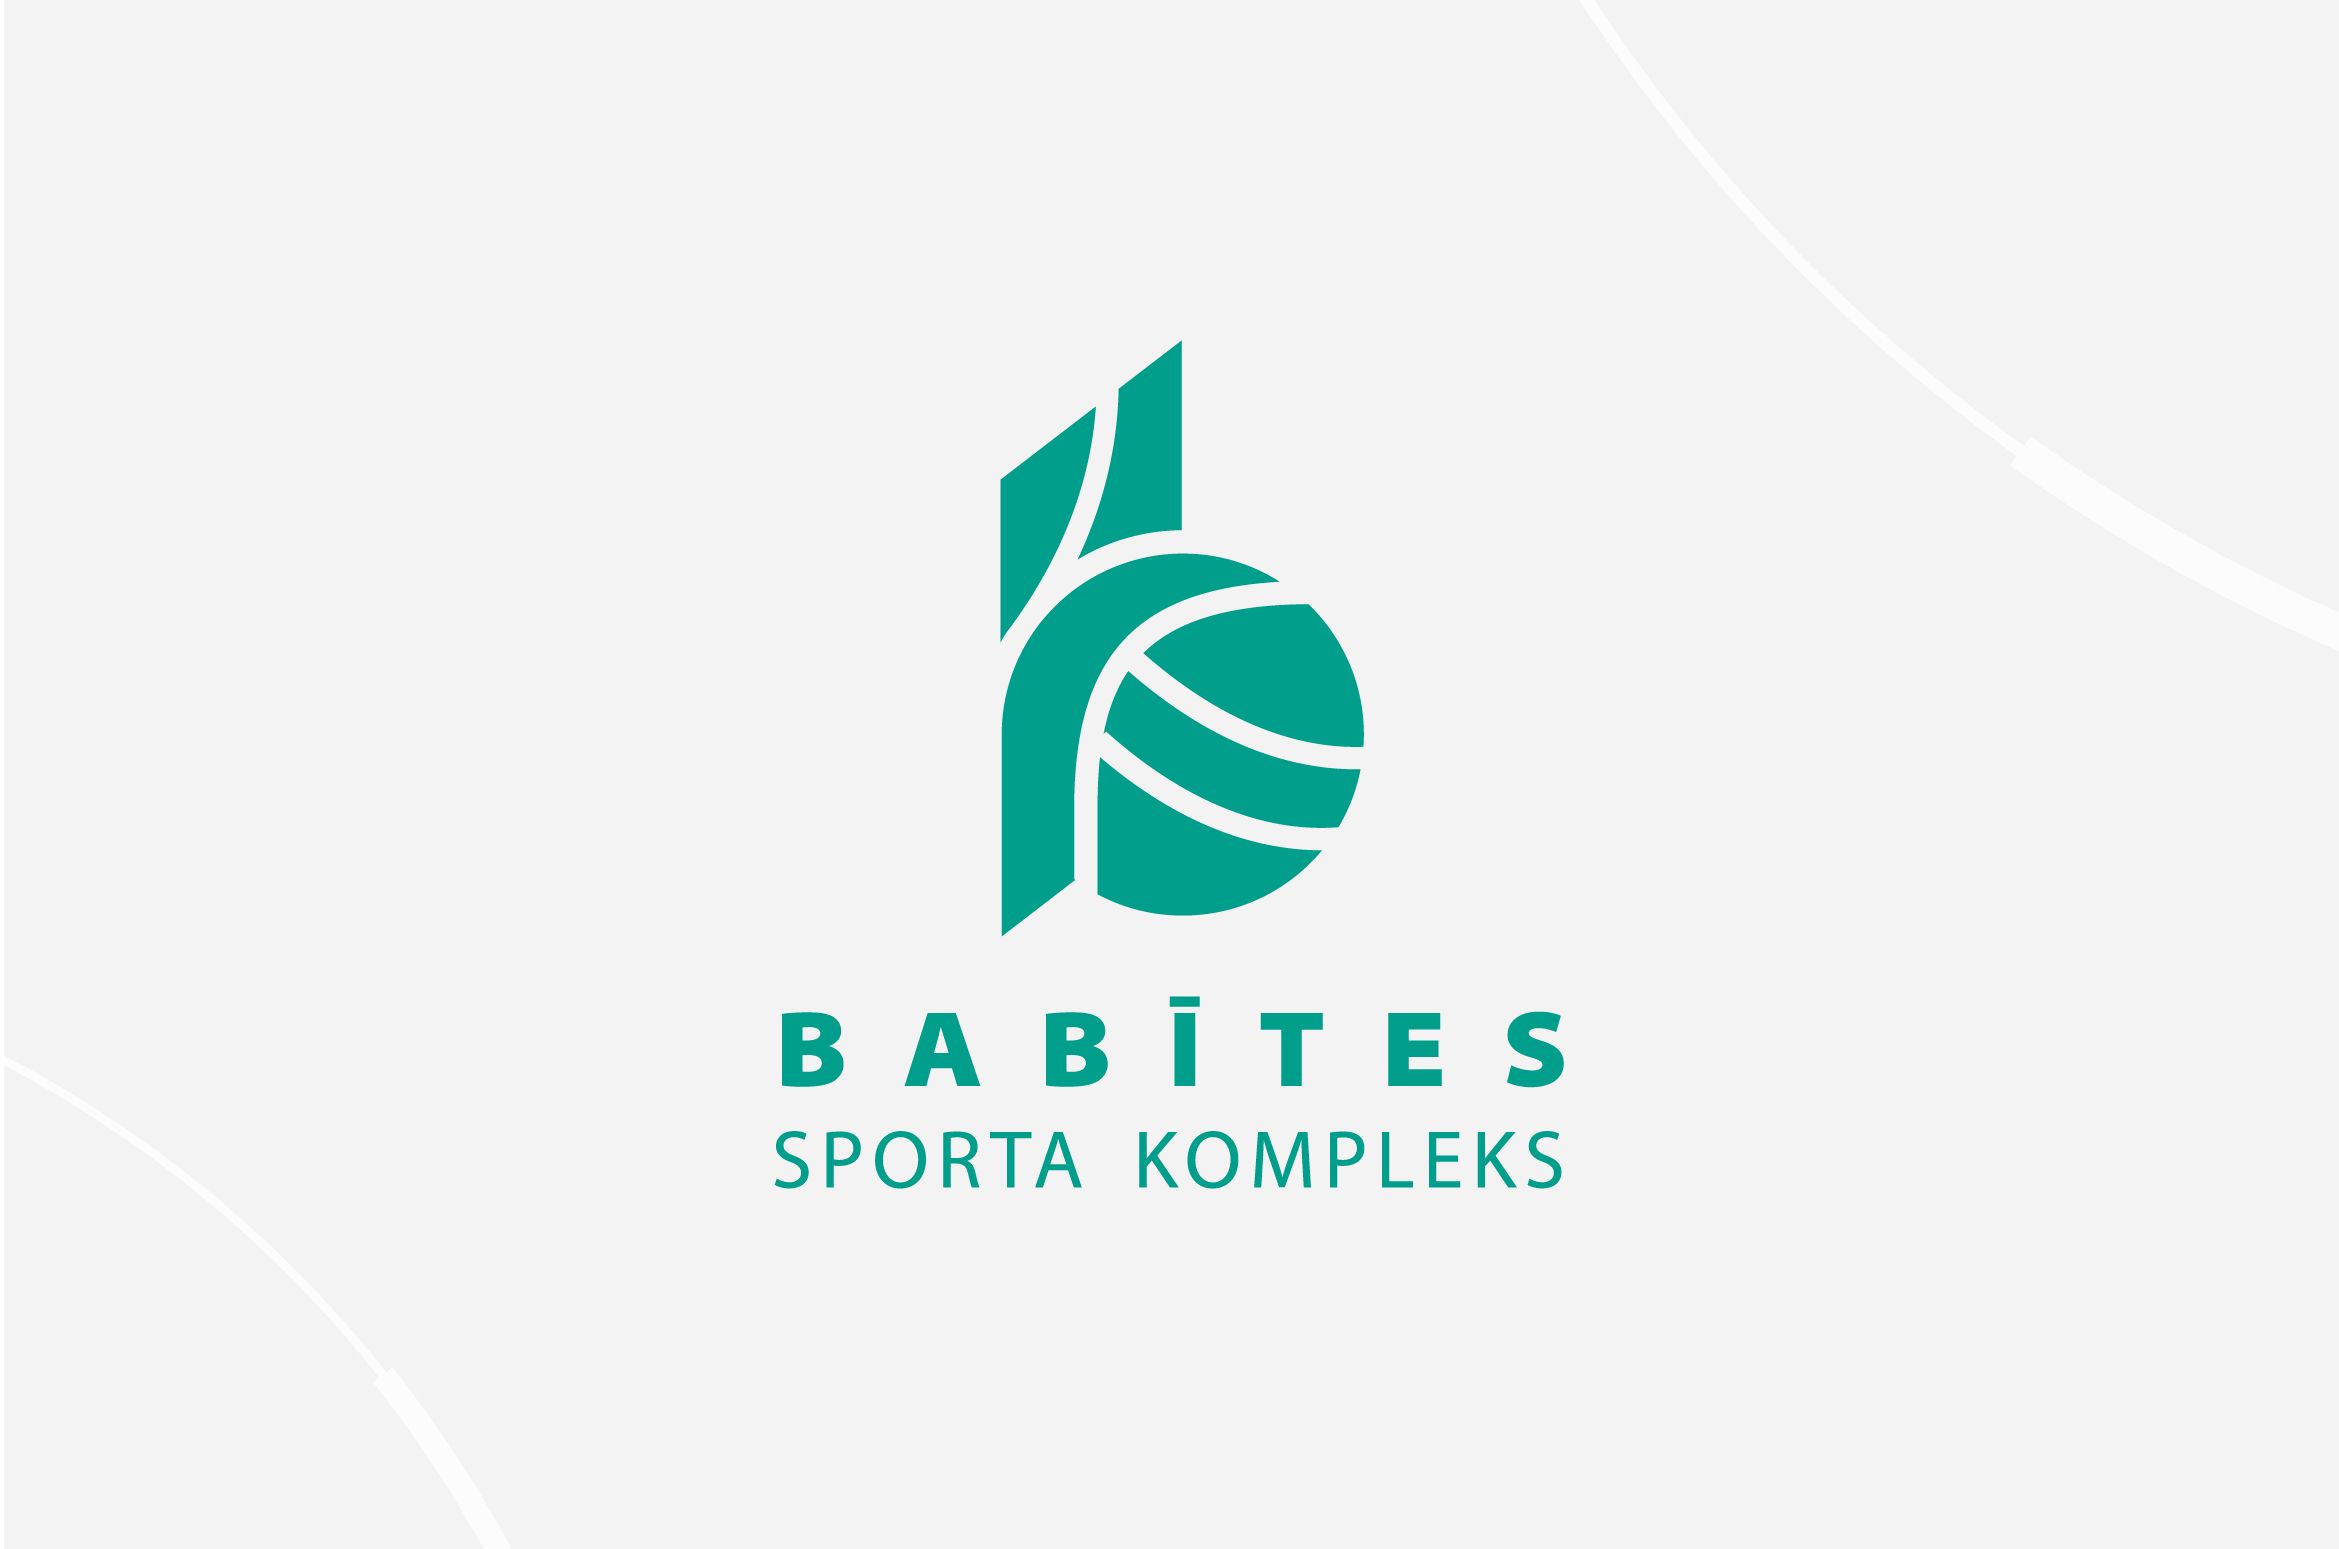 Babites Sporta kompleks logo design